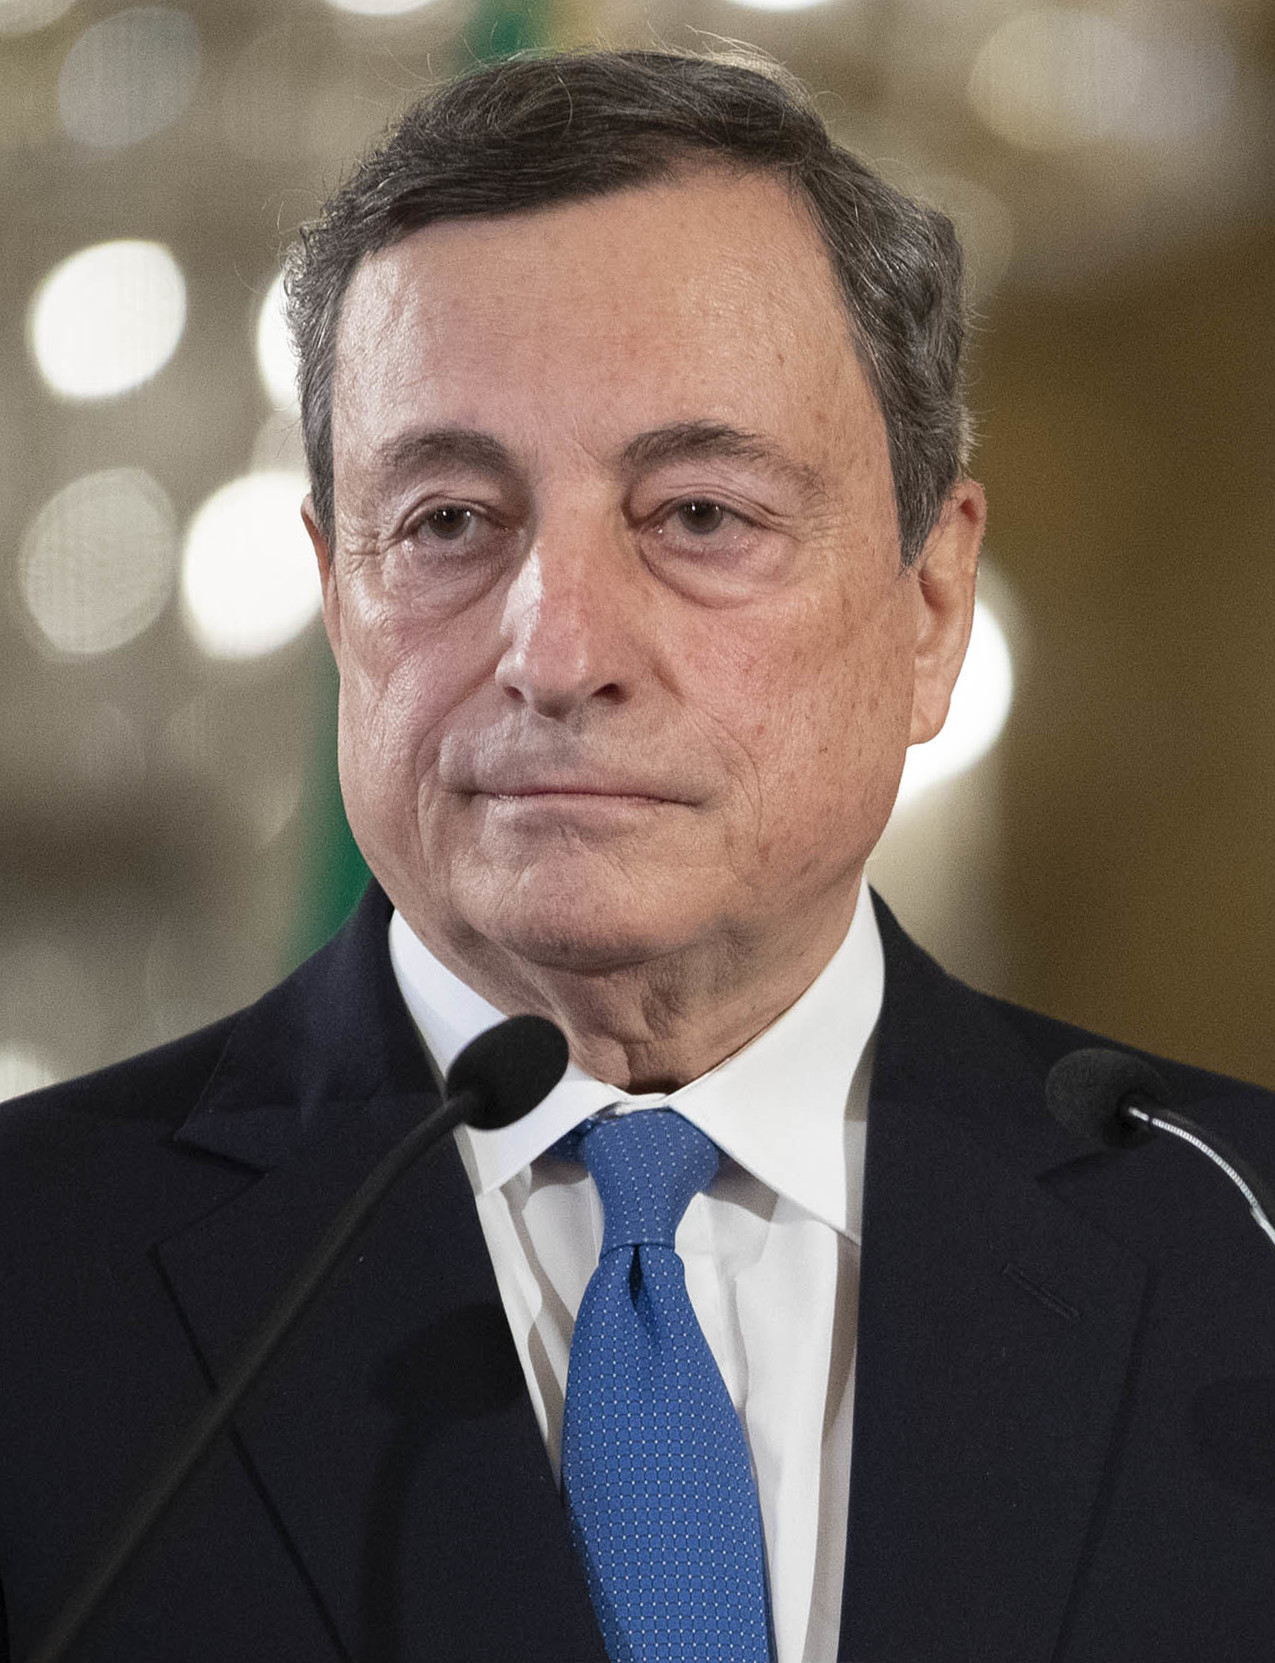 Mario Draghi Goldman Sachs